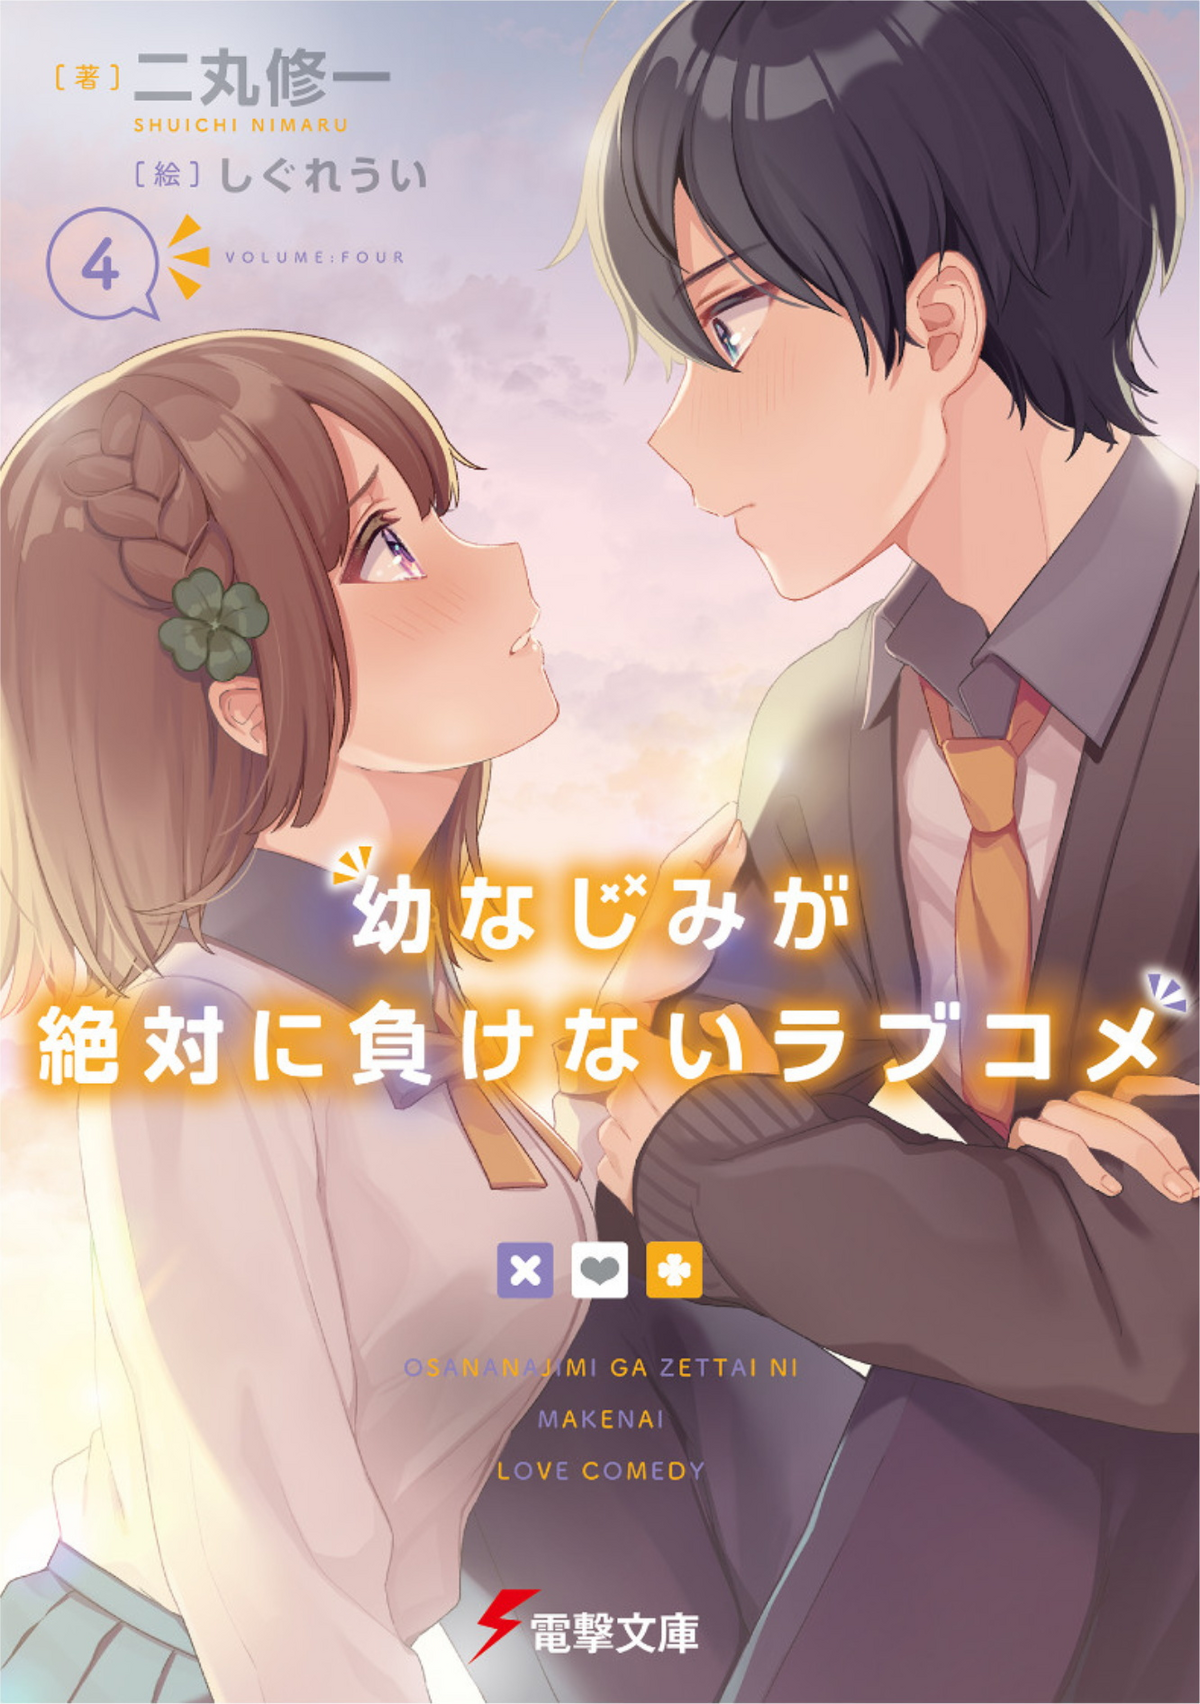 Kadokawa Reveals 2nd 'Osananajimi ga Zettai ni Makenai Love Come' Anime  DVD/BD Release Packaging